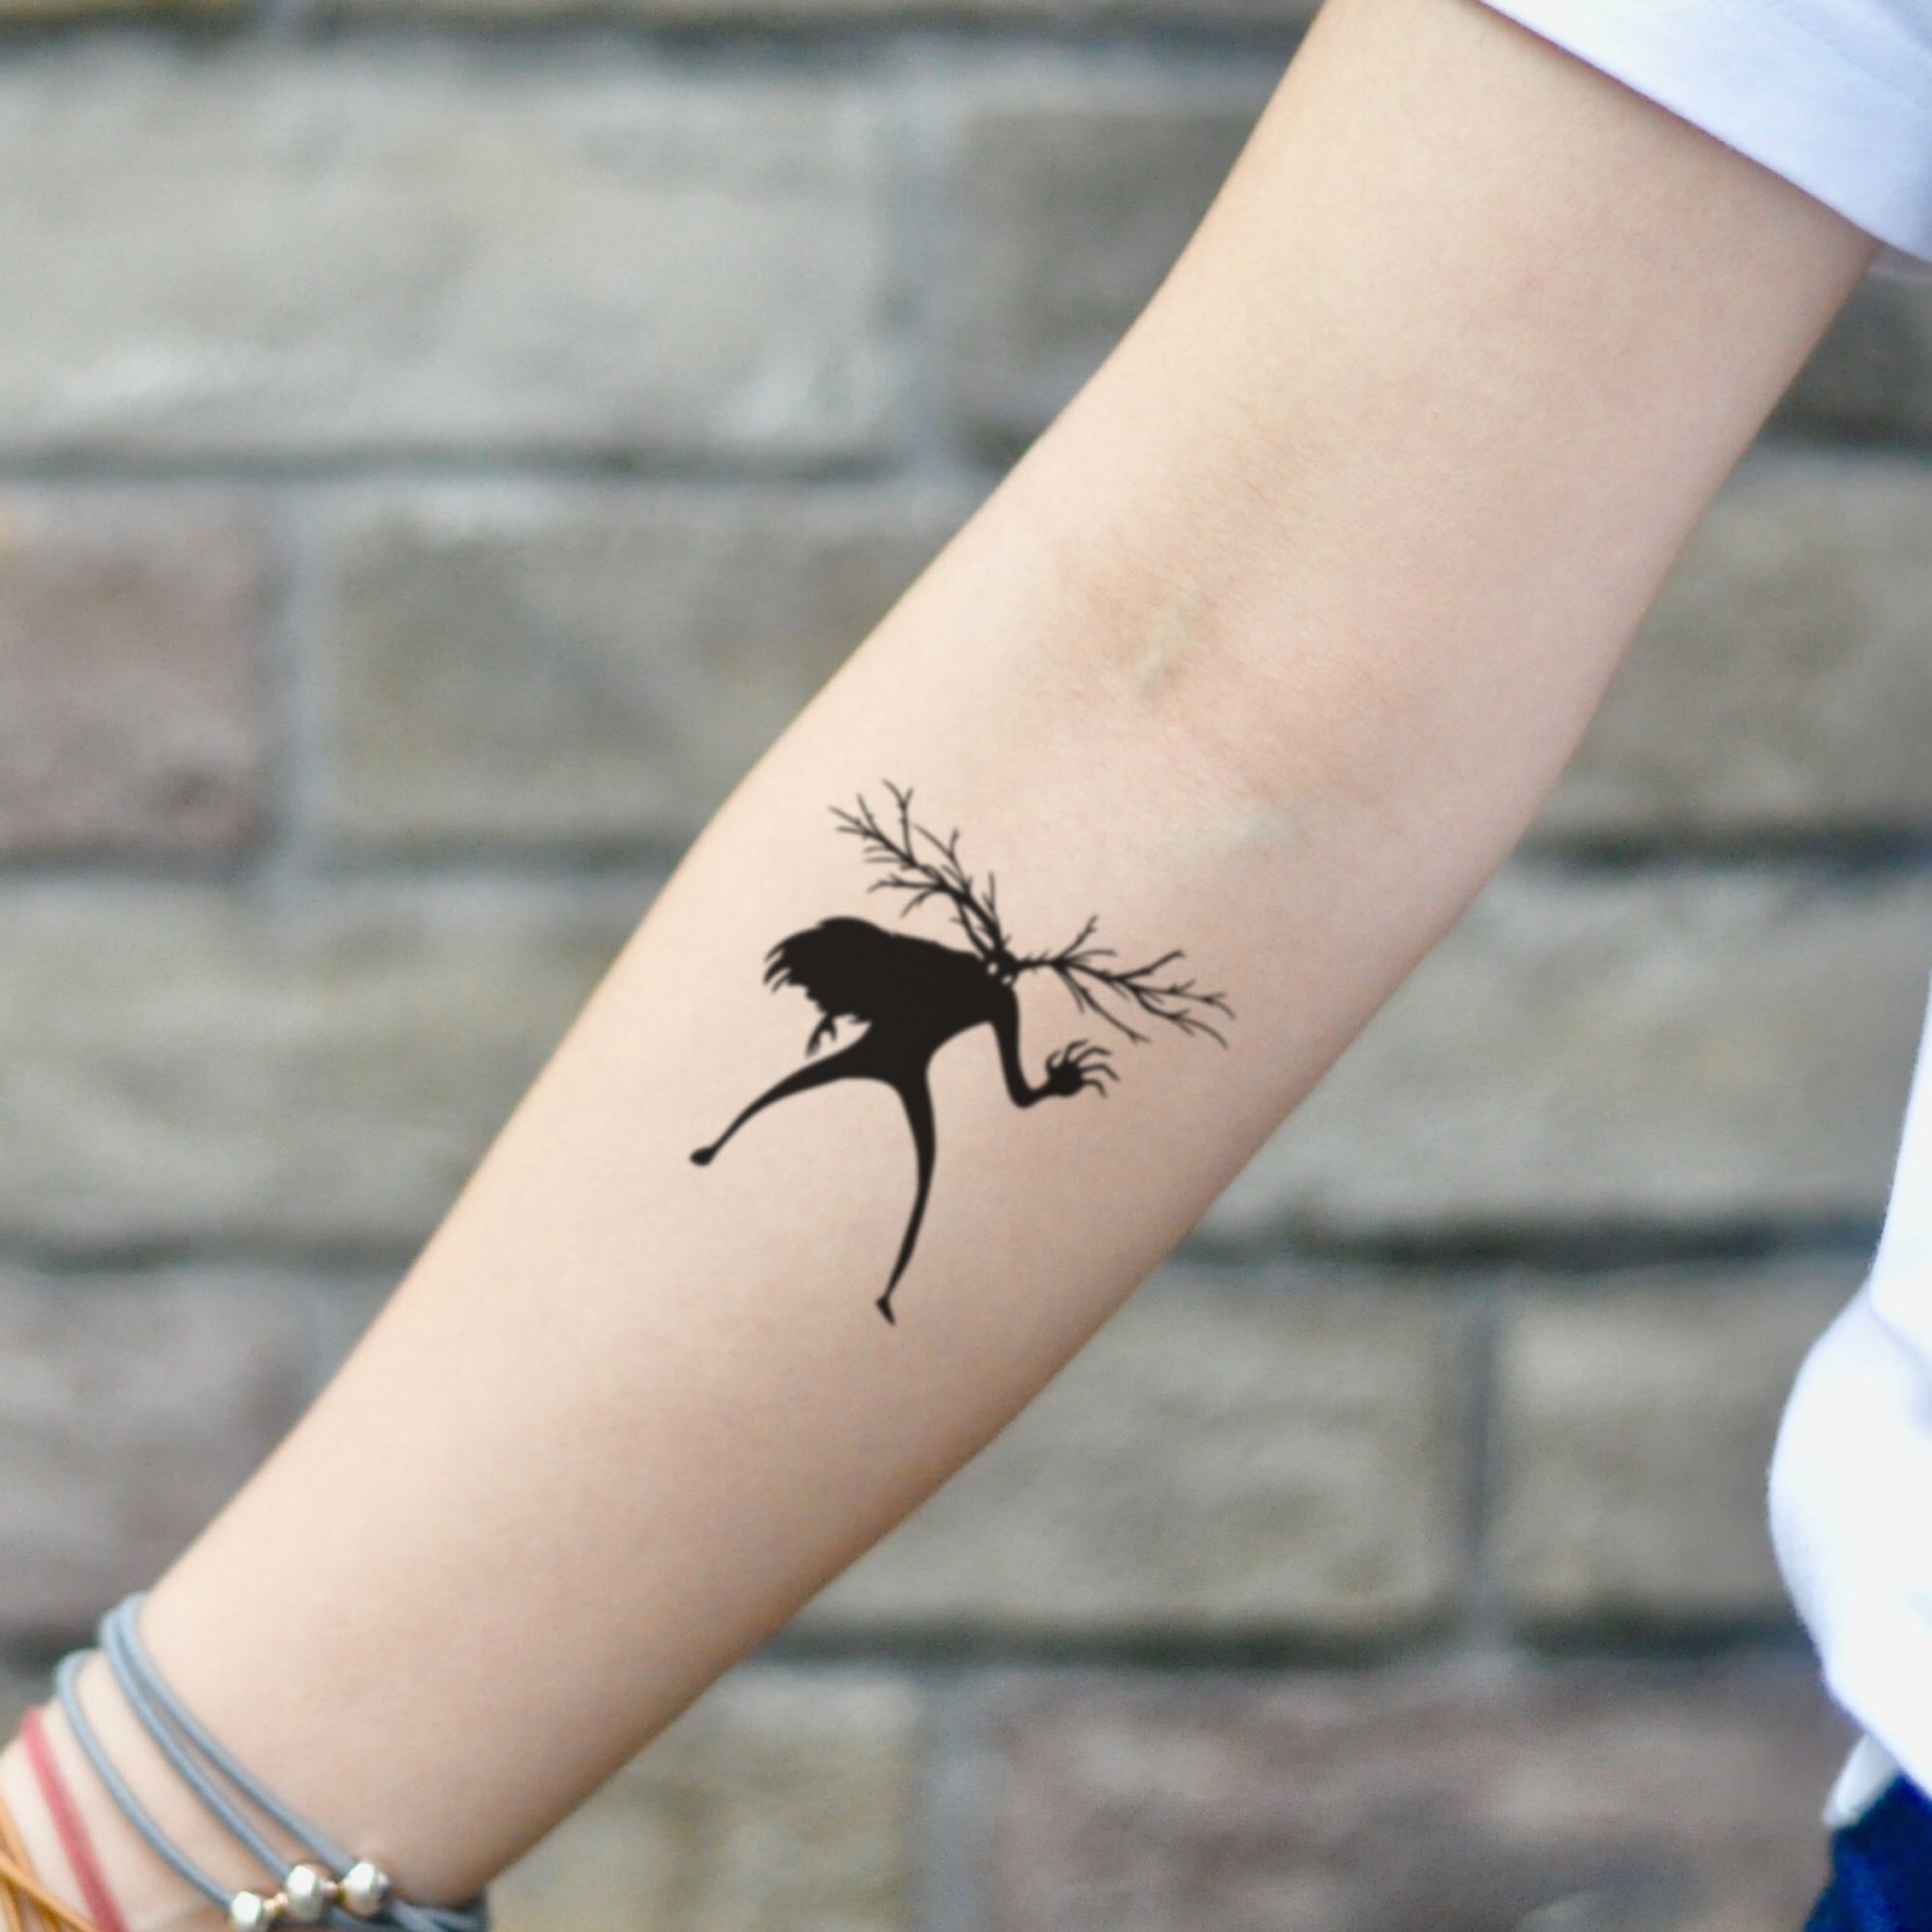 fake small over the garden wall beast minimalist temporary tattoo sticker design idea on inner arm